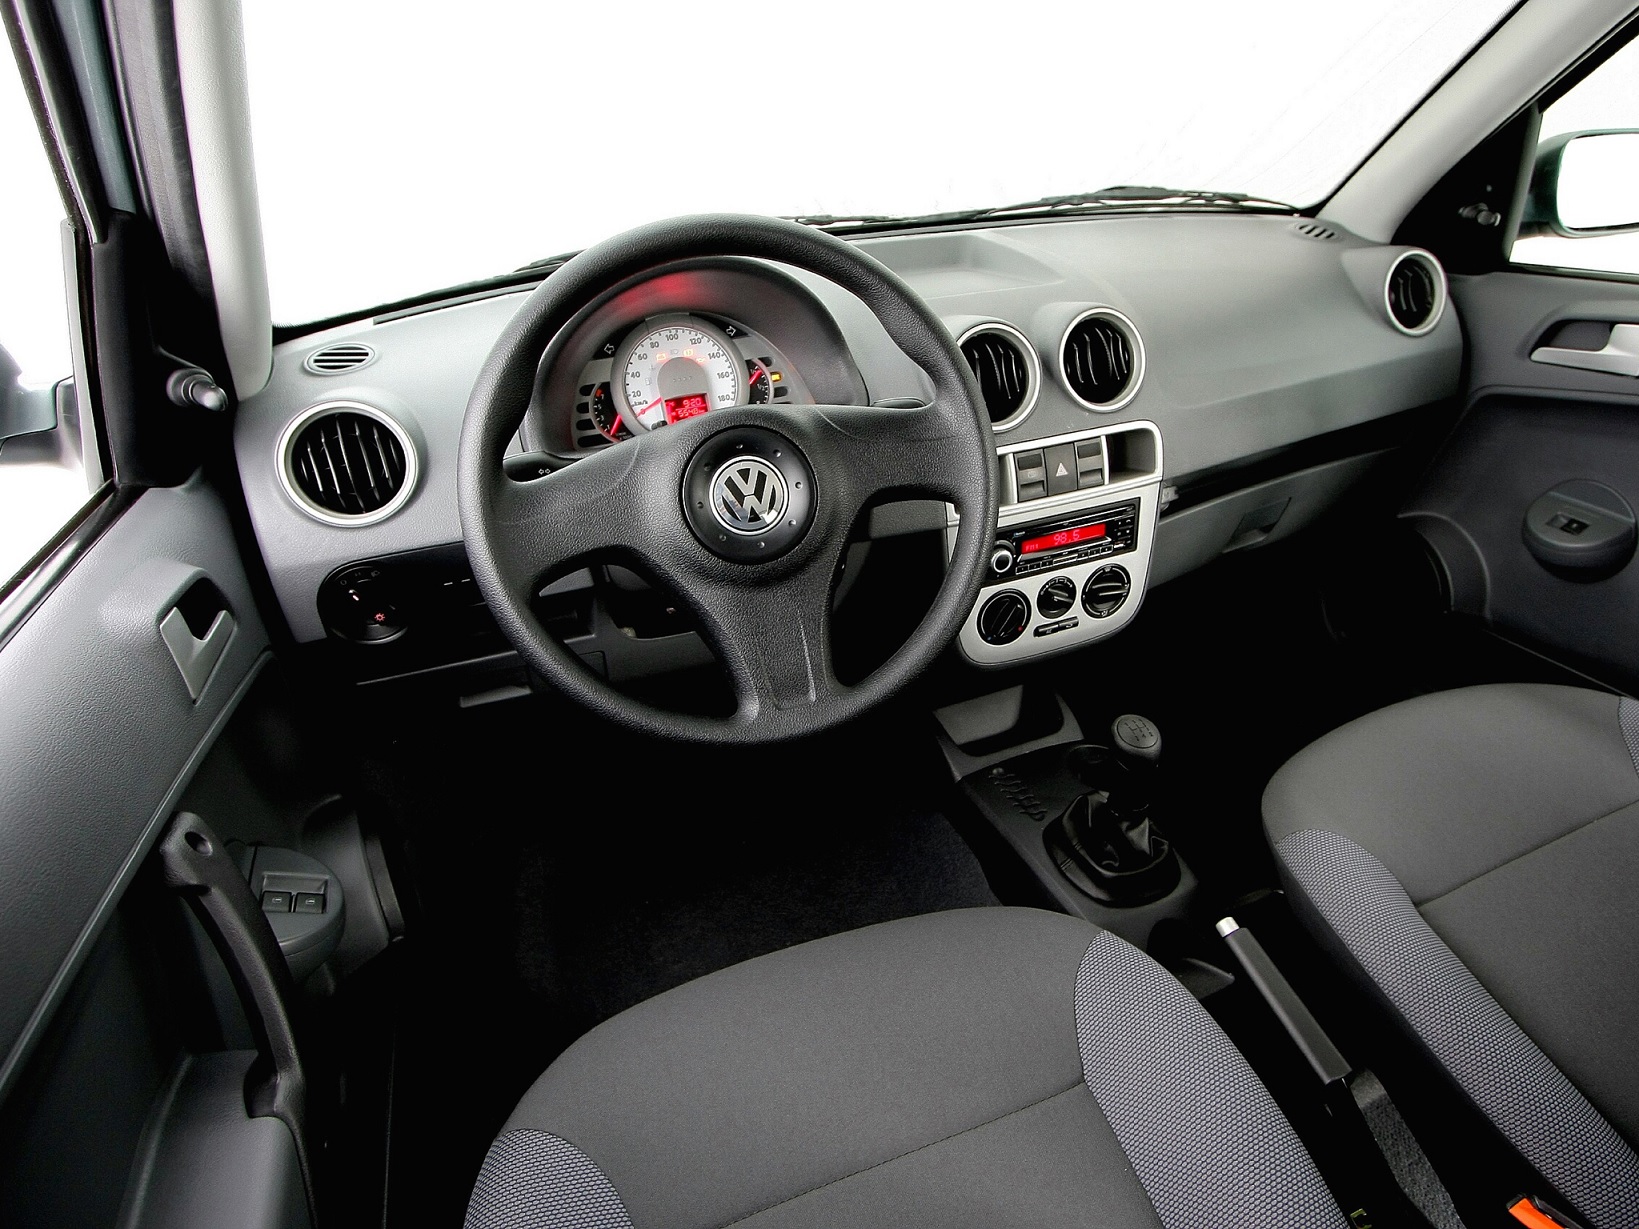 Volkswagen Gol G4 2006 Trend interior, display Dashboard and steering wheel